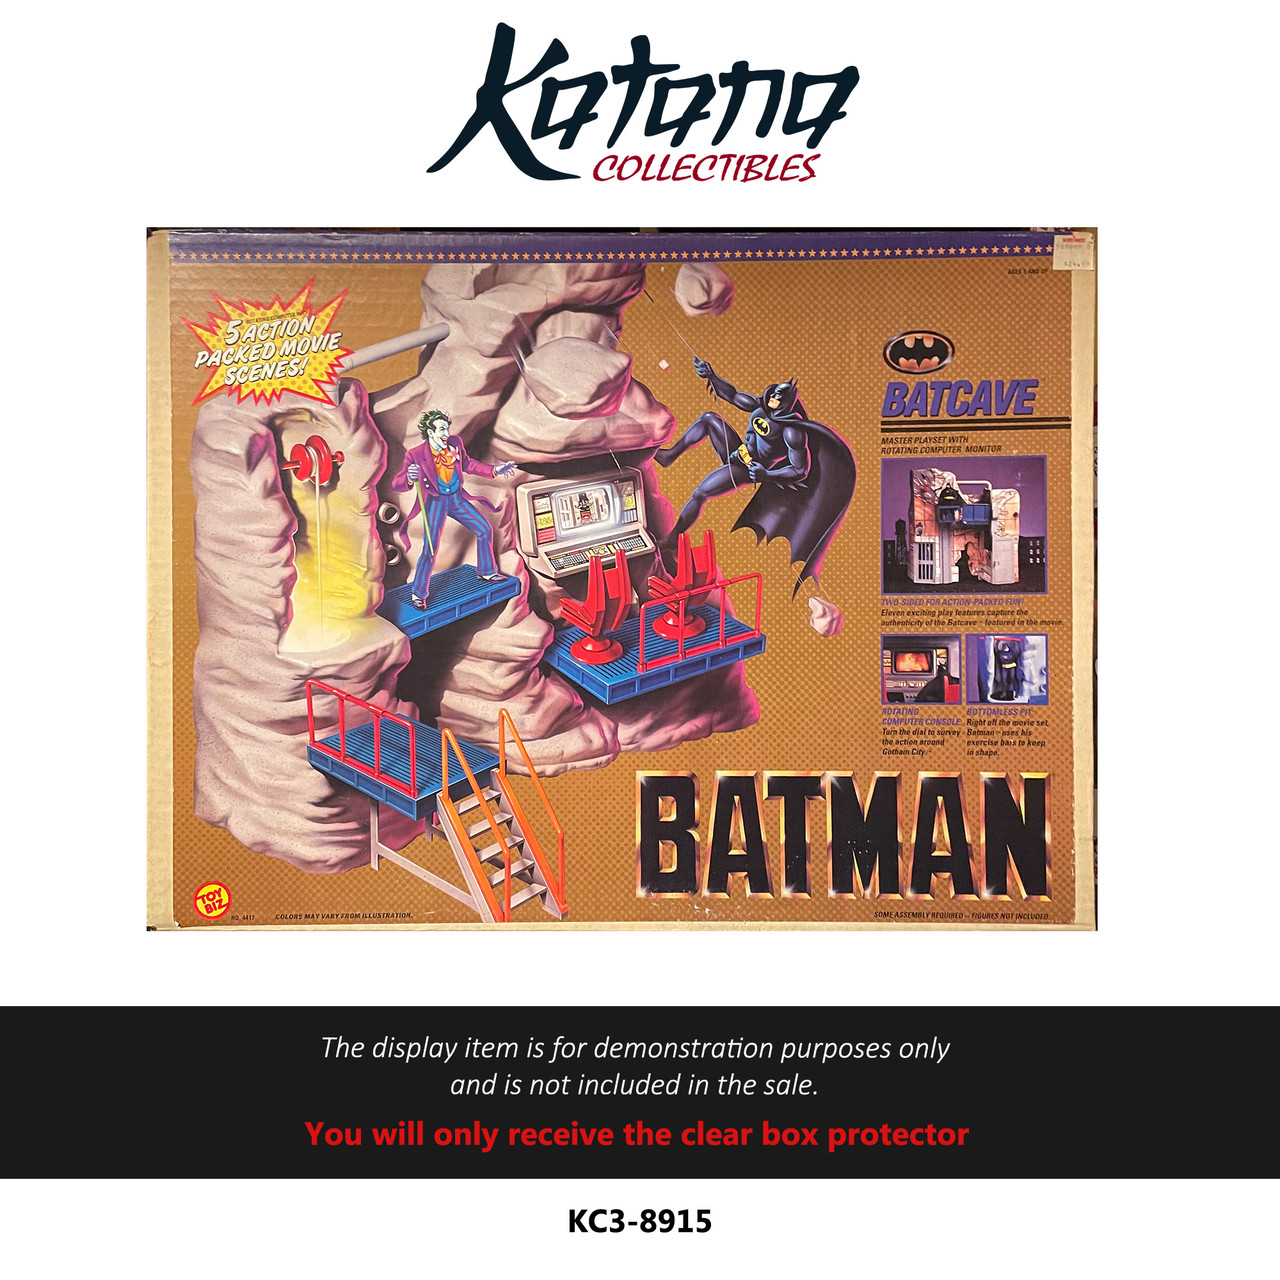 Katana Collectibles Protector For ToyBiz Batman Batcave